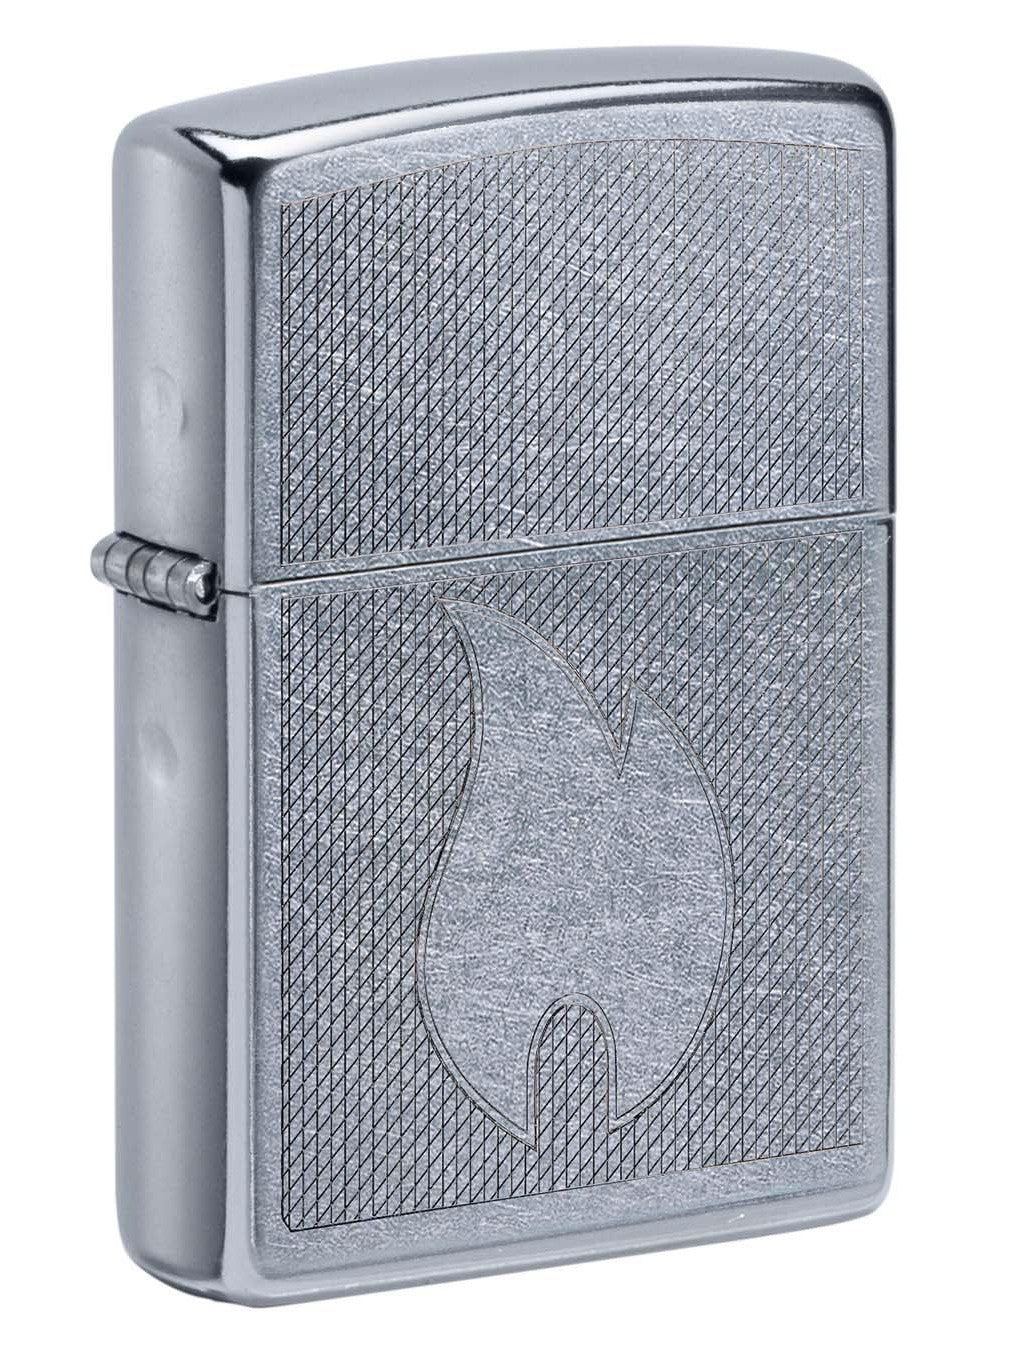 Zippo Lighter: Zippo Flame Design, Engraved - Street Chrome 61001